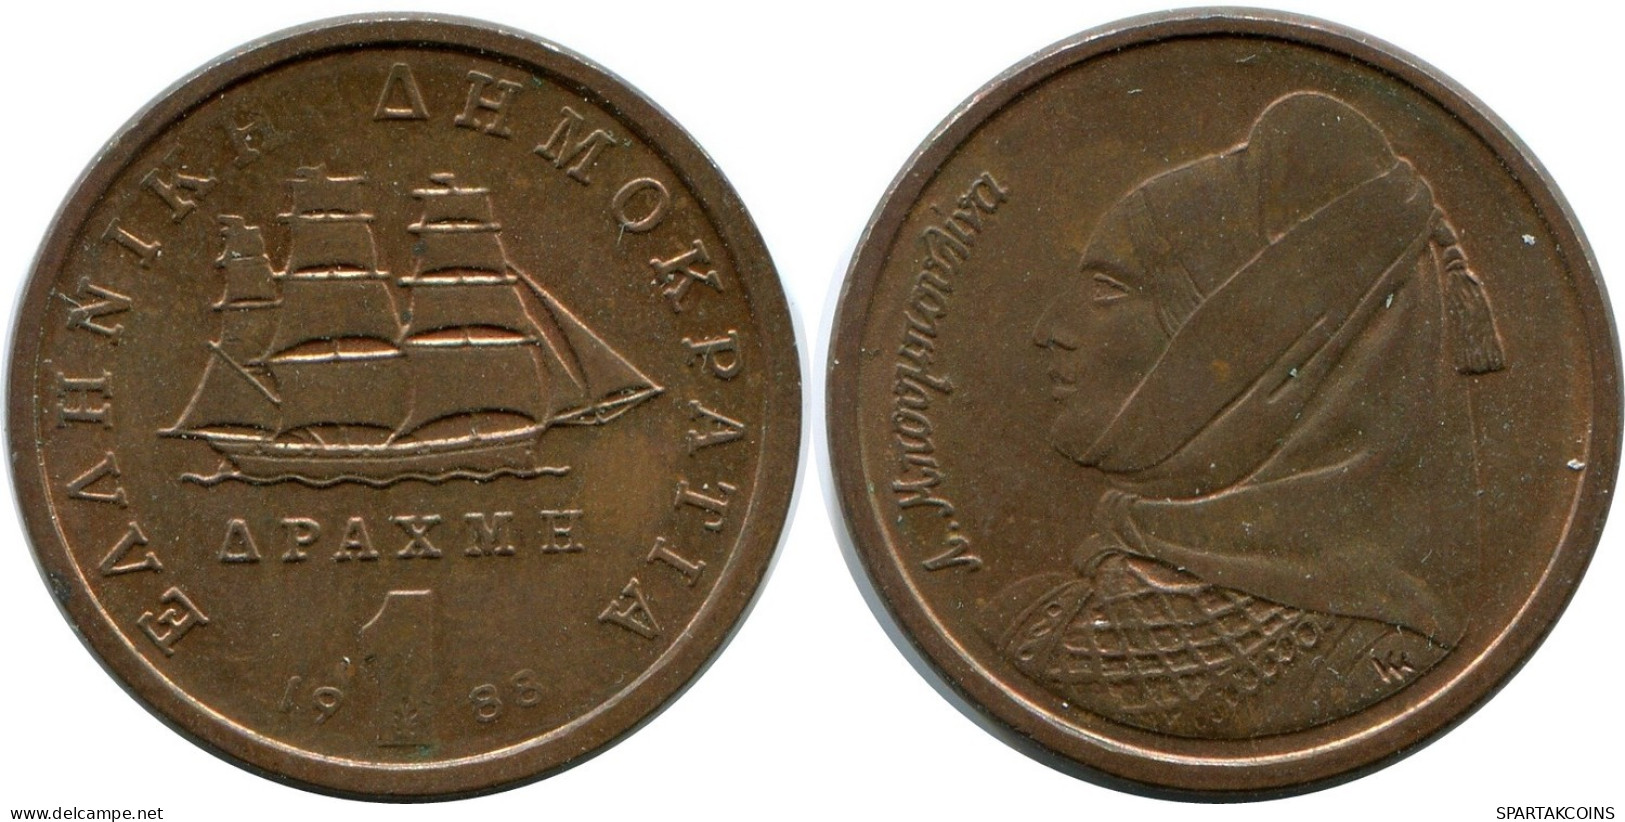 1 DRACHMA 1988 GRECIA GREECE Moneda #AY620.E.A - Grecia